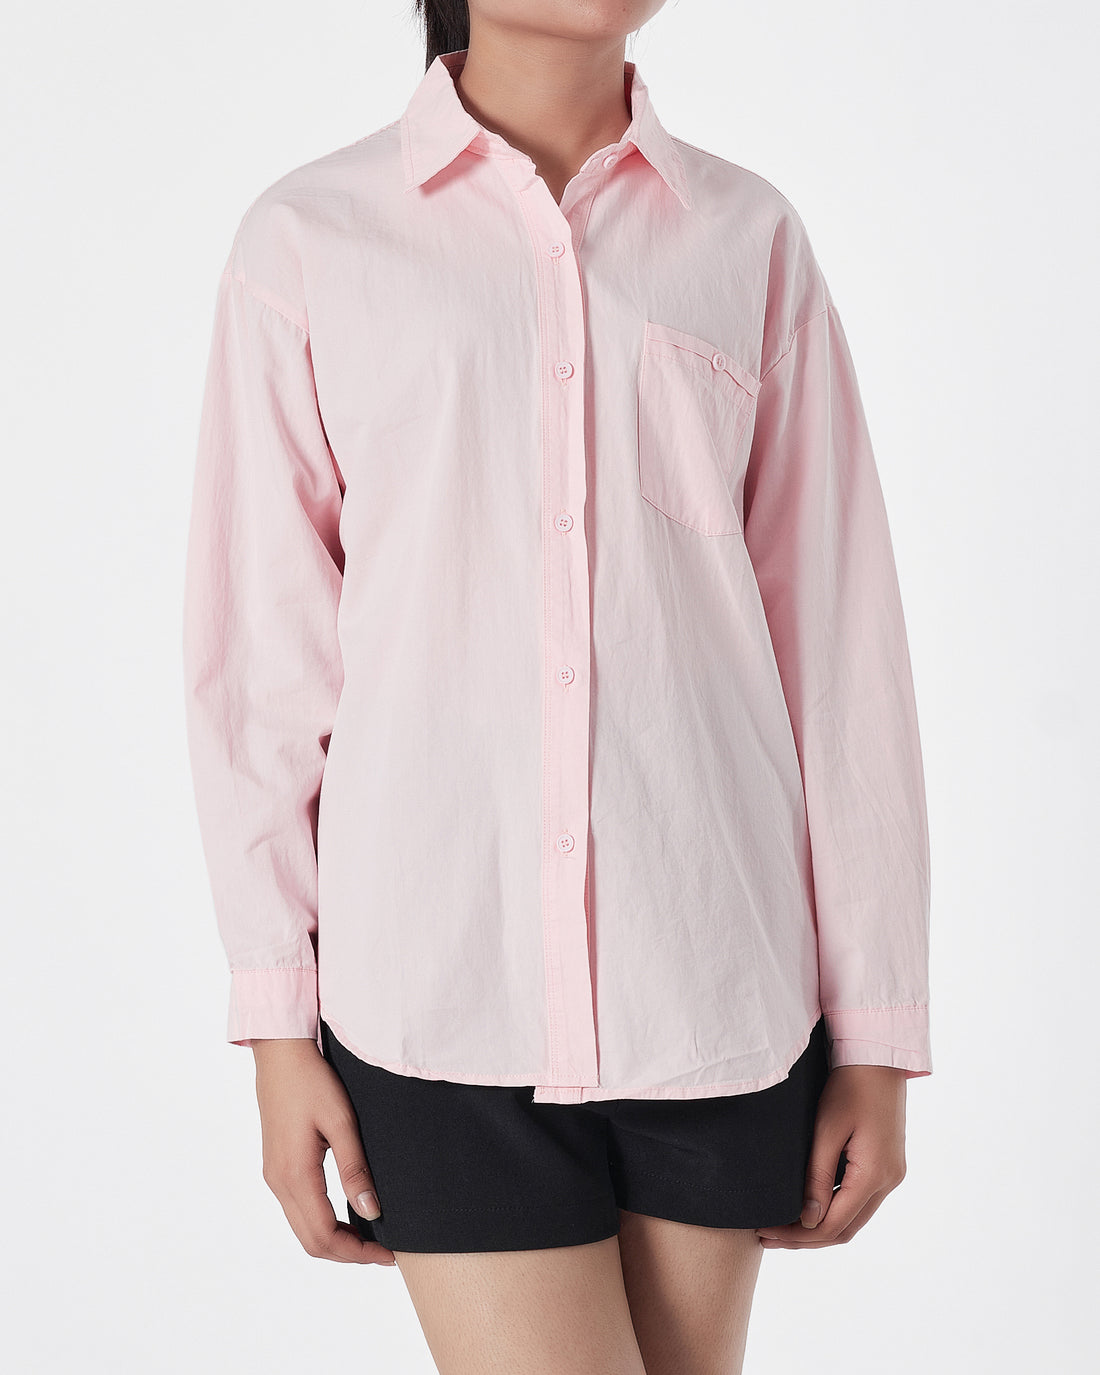 Plain Color Lady Pink Shirts Long Sleeve 14.90